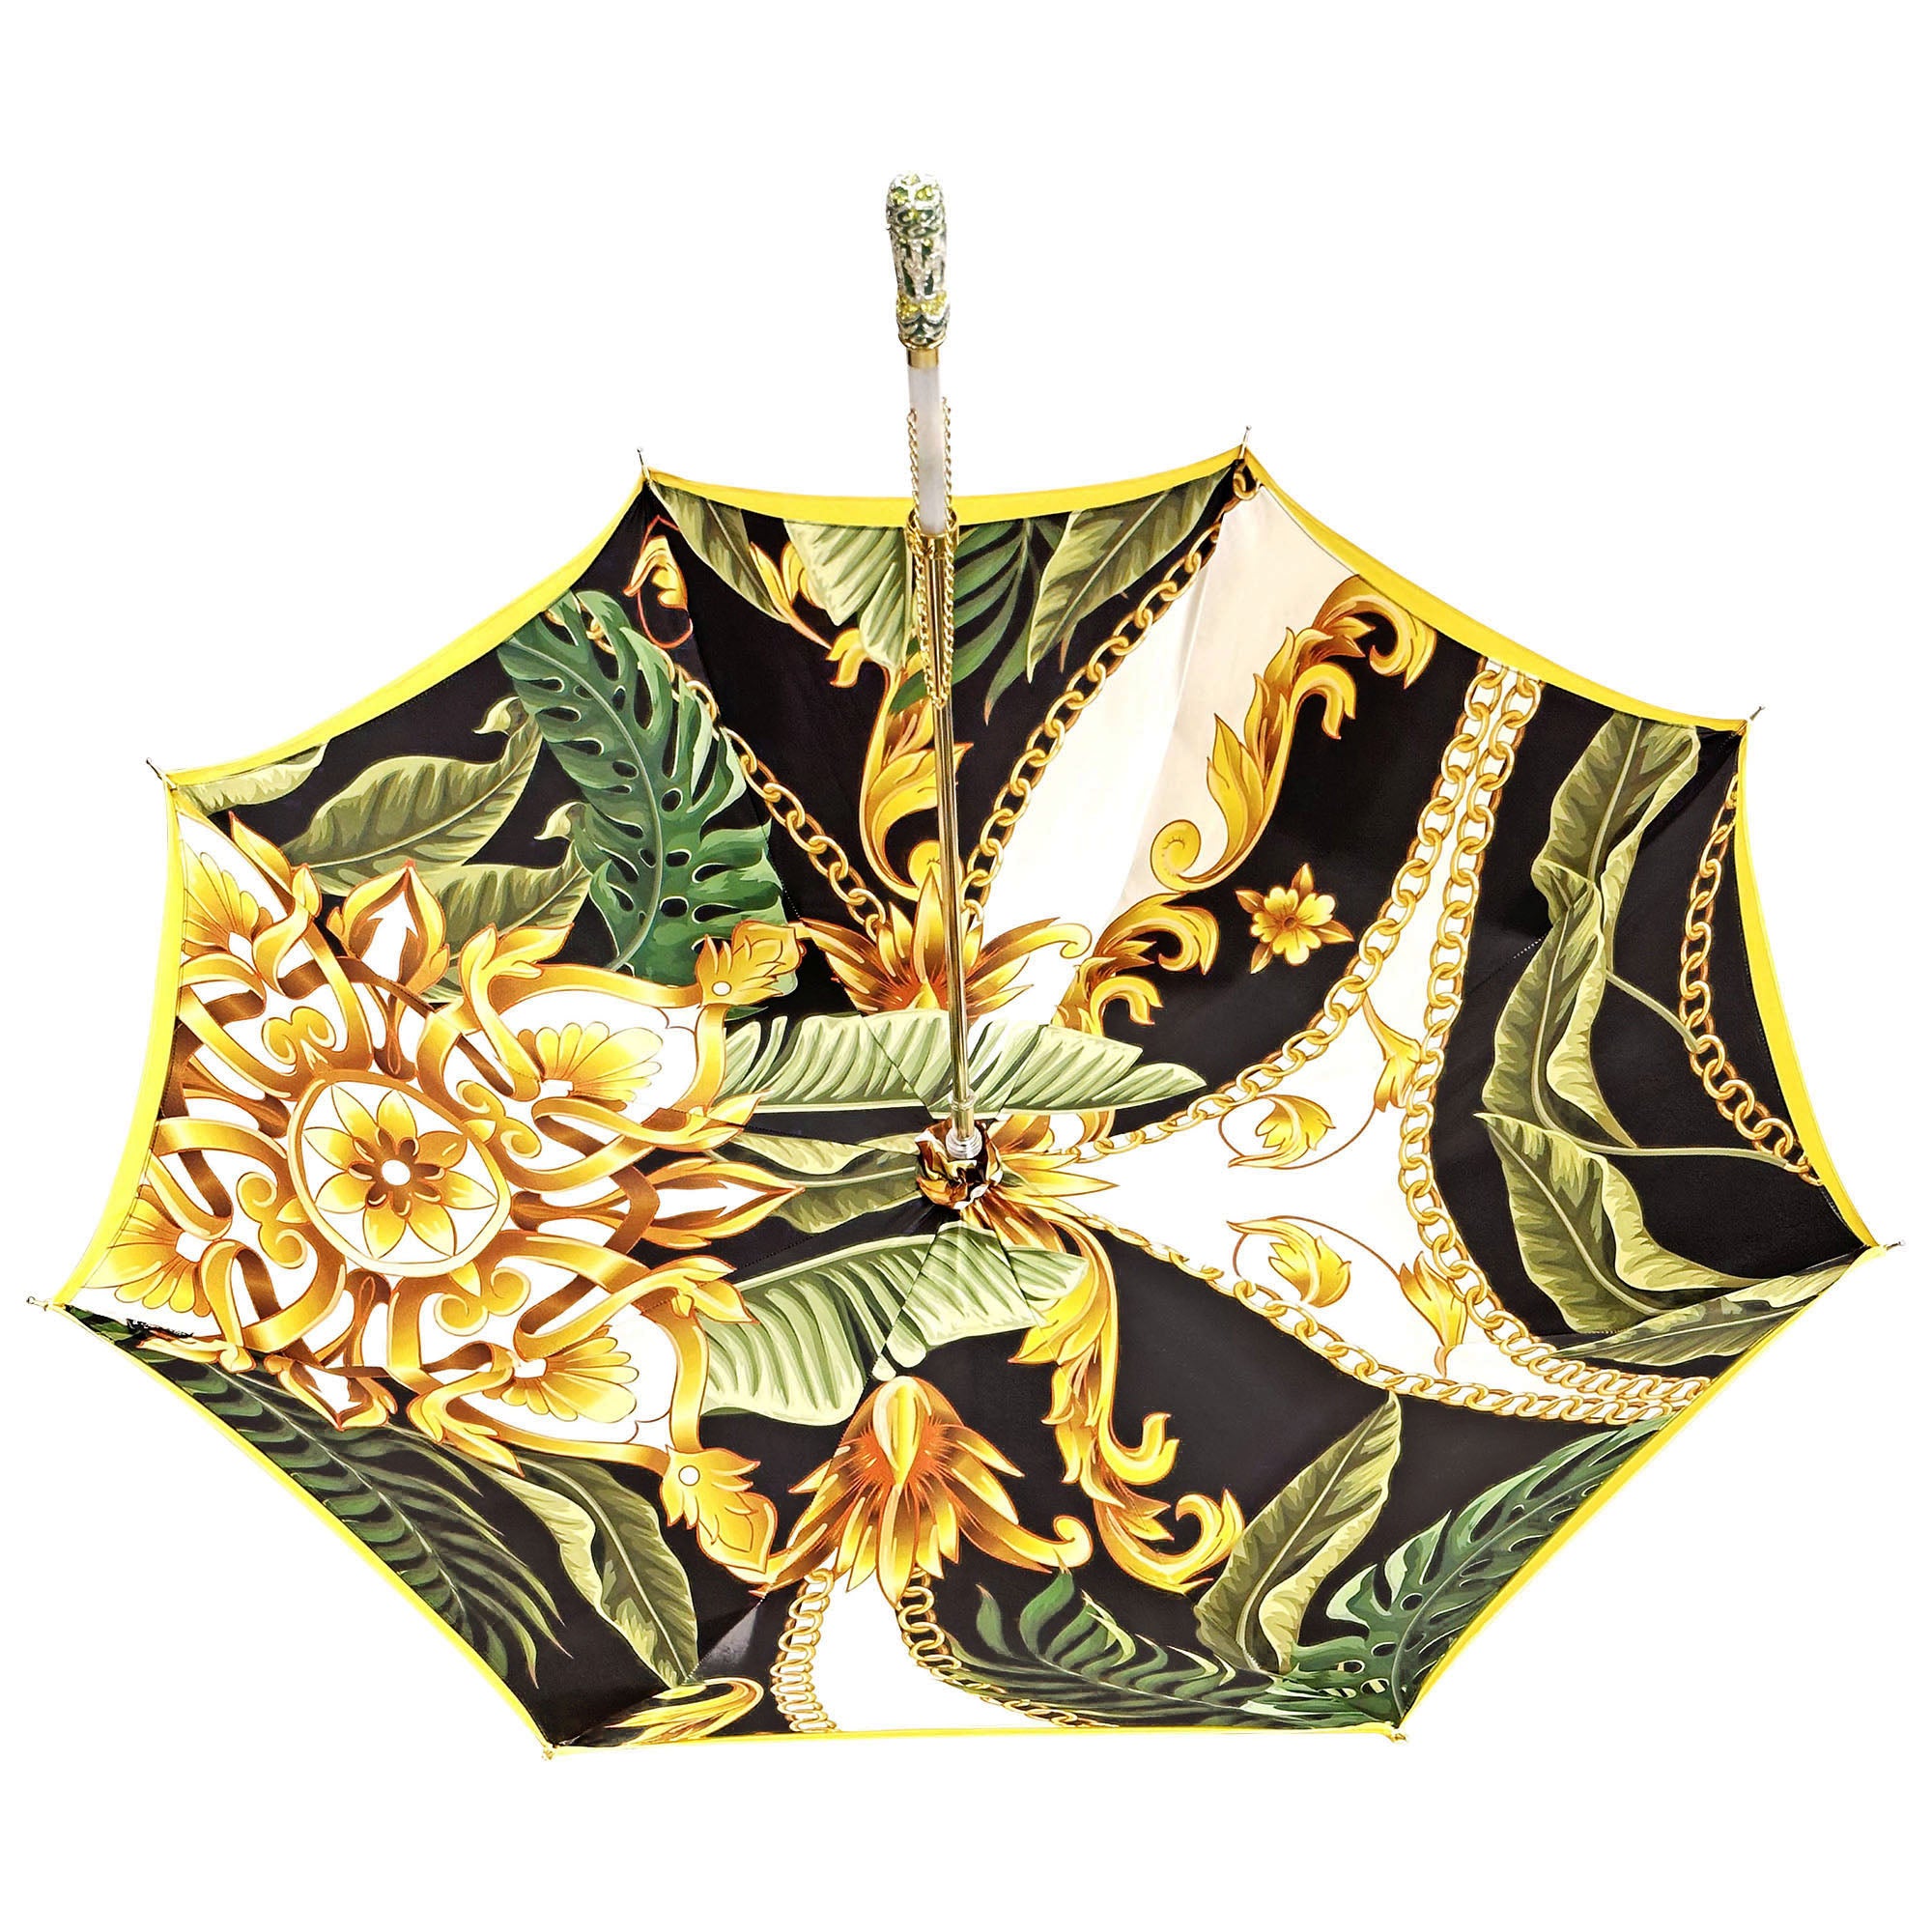 Wonderfull yellow Gold umbrella with Exclusive design